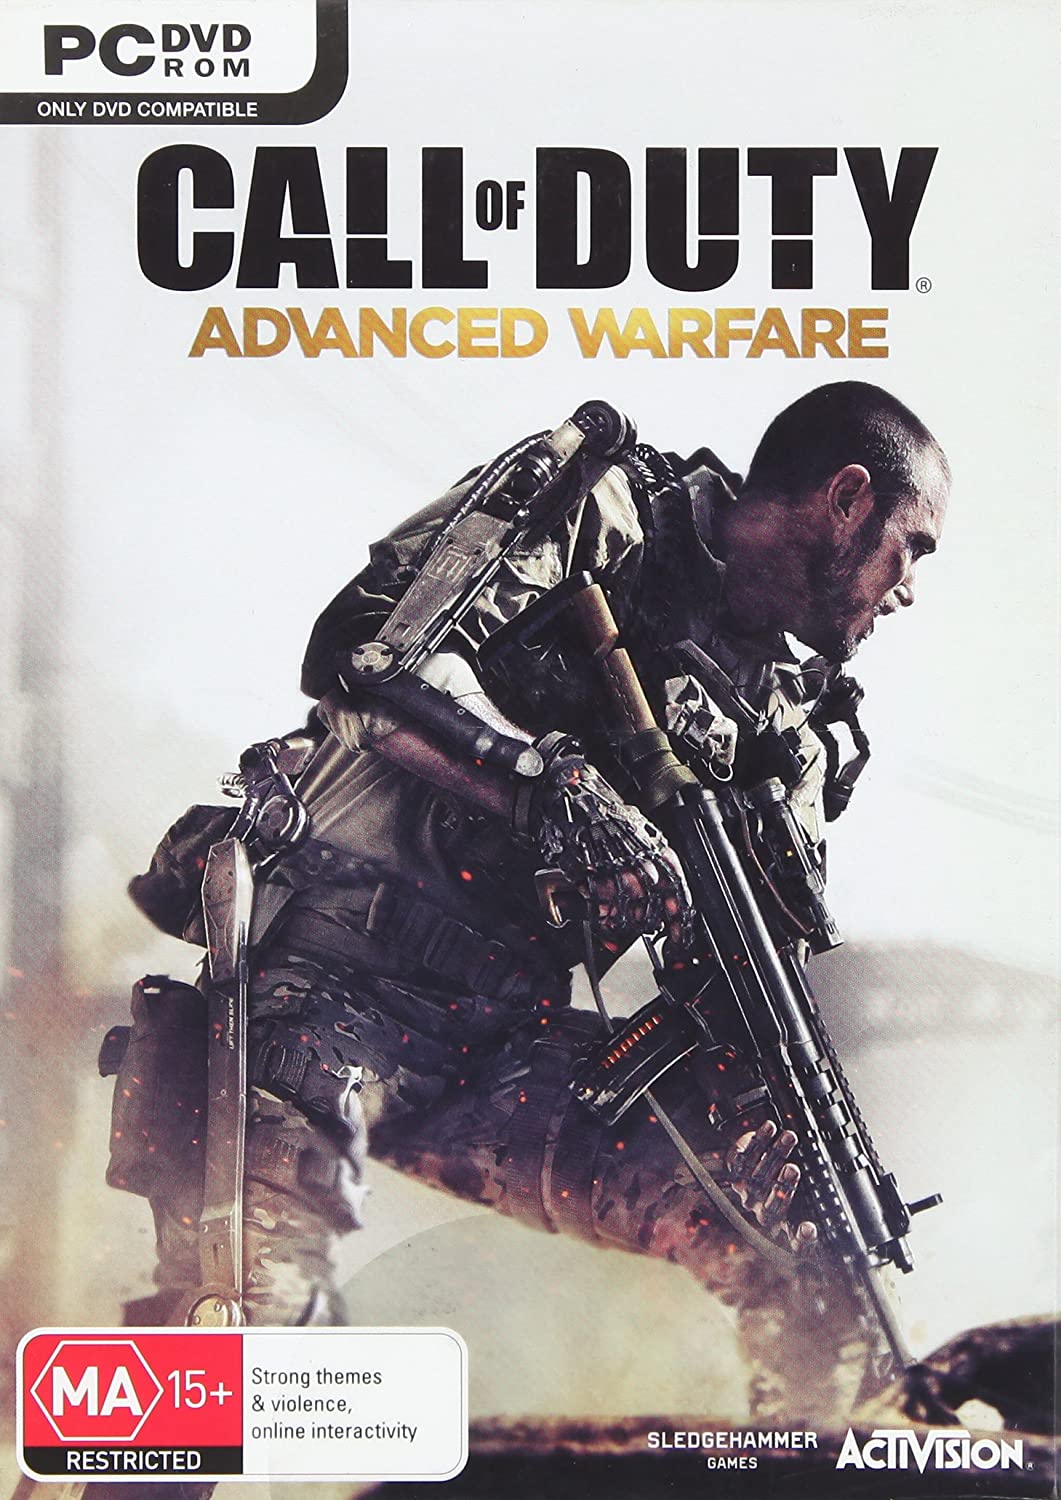 Call Of Duty: Advanced Warfare PC